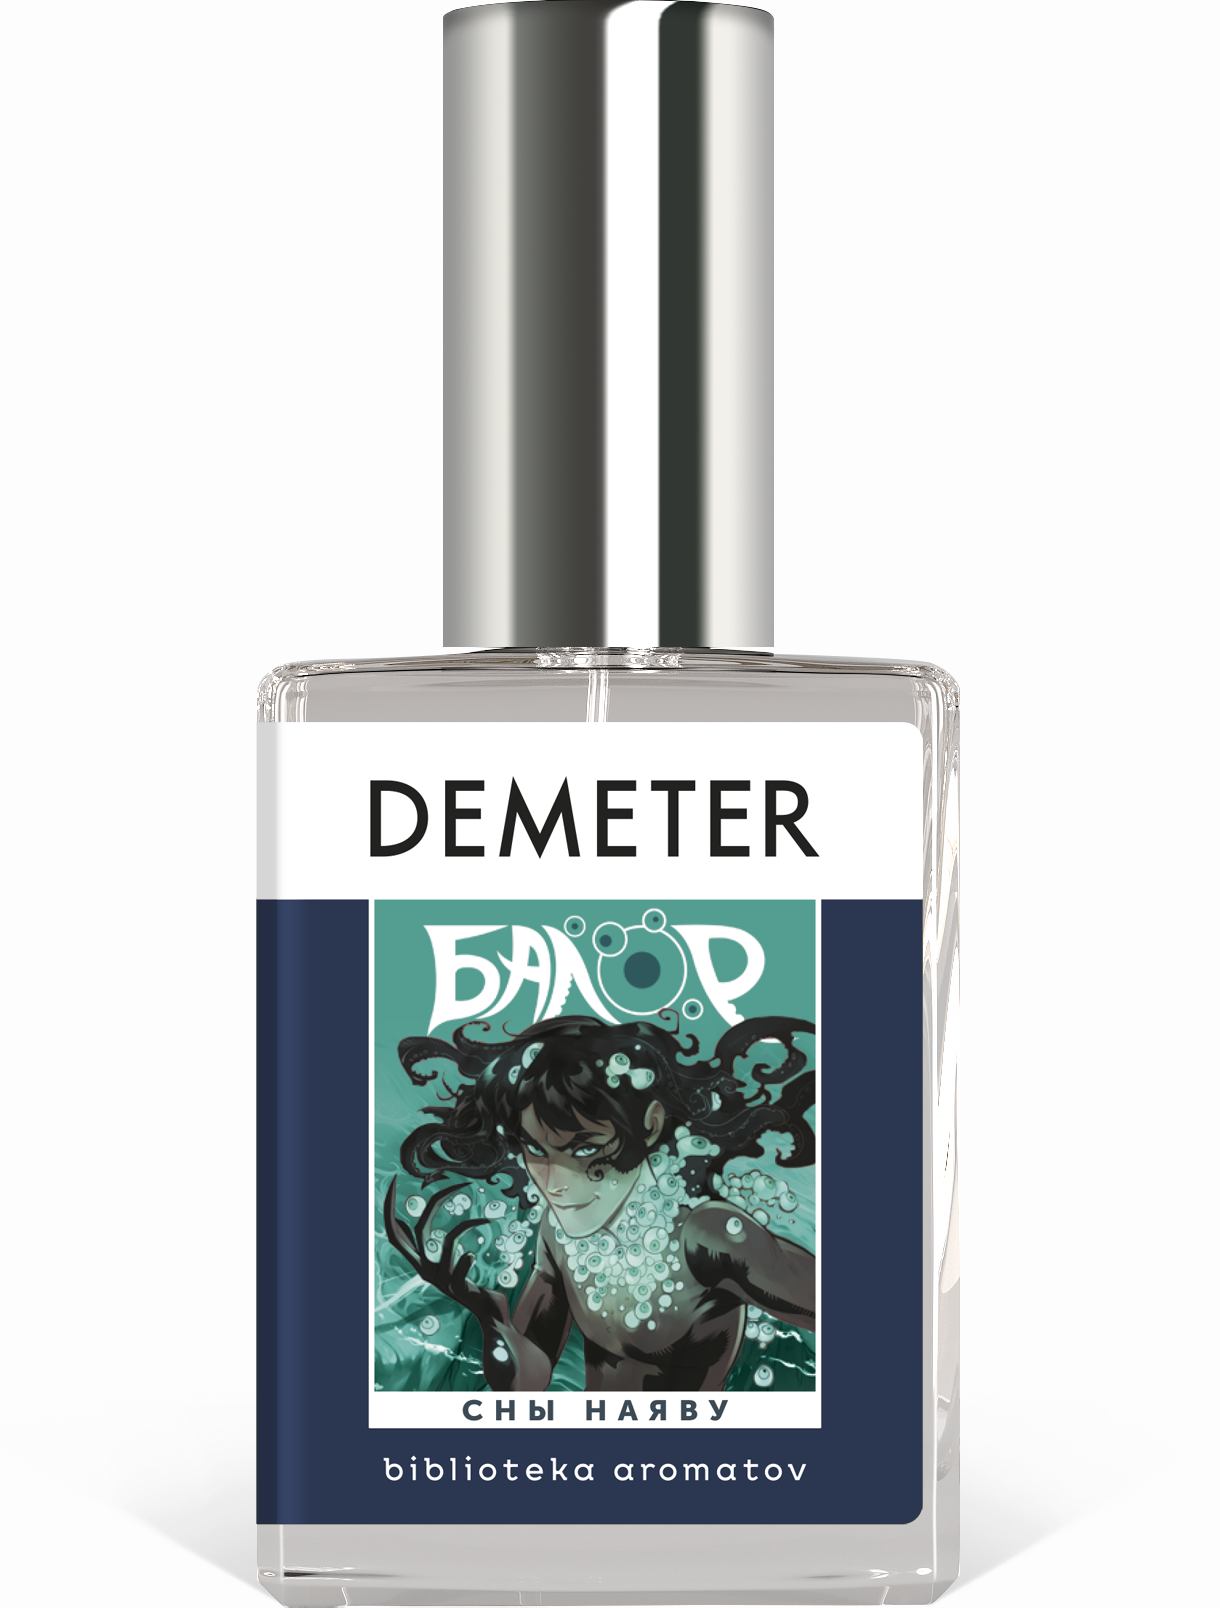 Demeter Fragrance Library Духи-спрей «Балор» (Сны наяву) 30мл повелитель снов ключи от темного мира